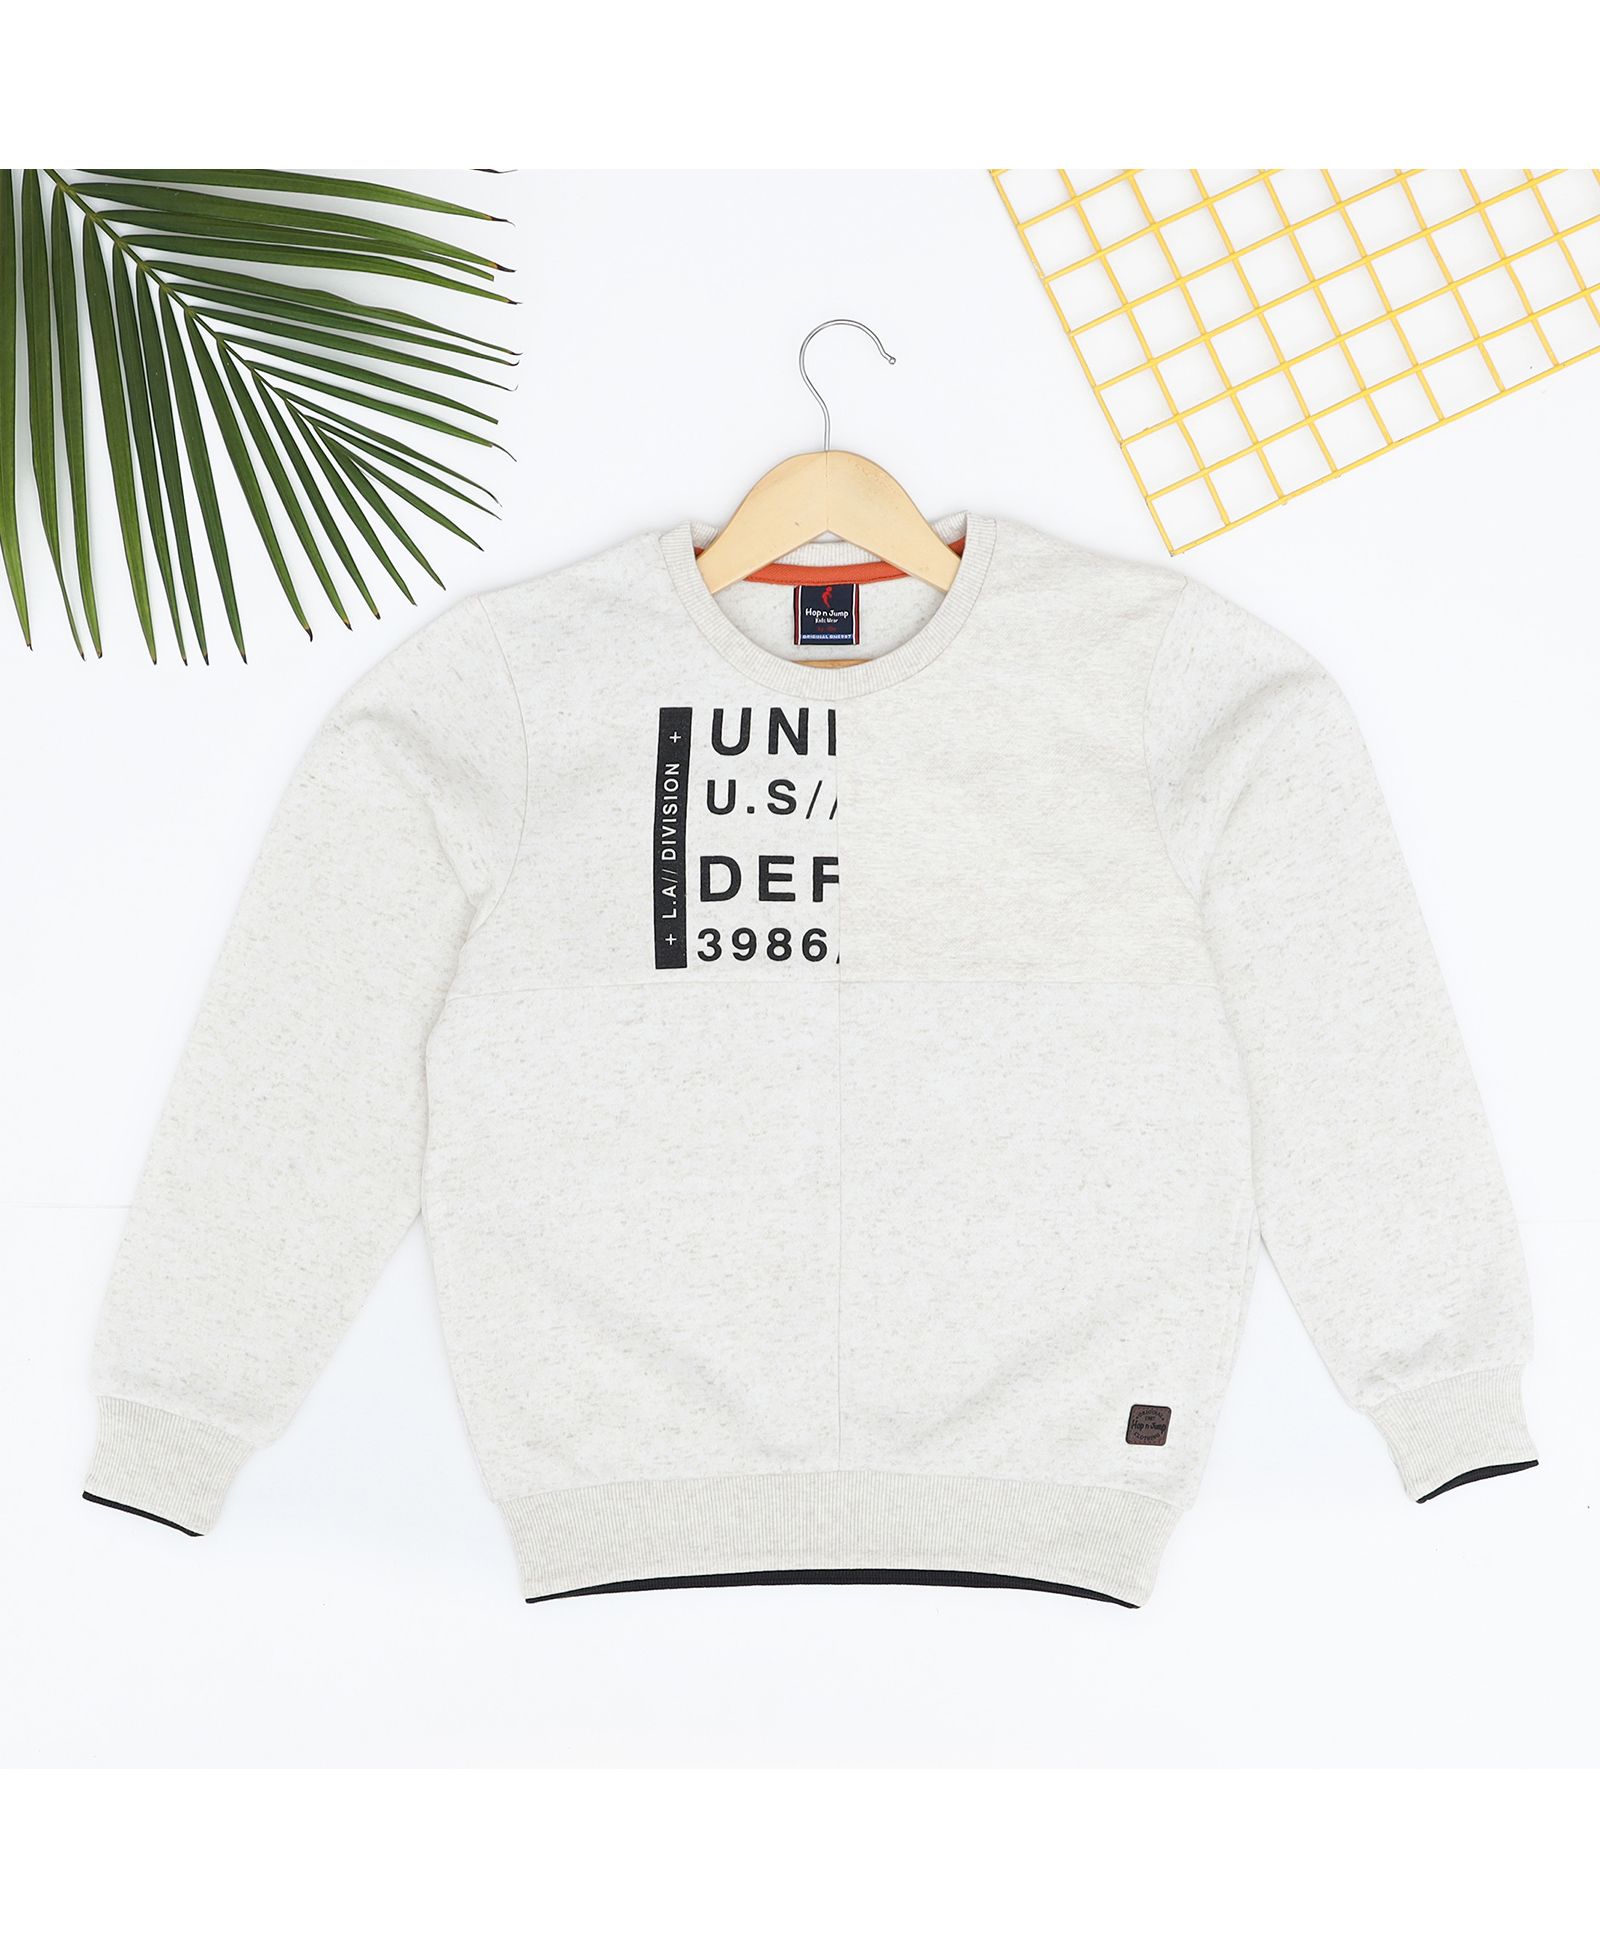 Buy Hop N Jump Full Sleeves Printed Sweatshirt Light Grey For Boys 9 10 Years Online In India Shop At Firstcry Com